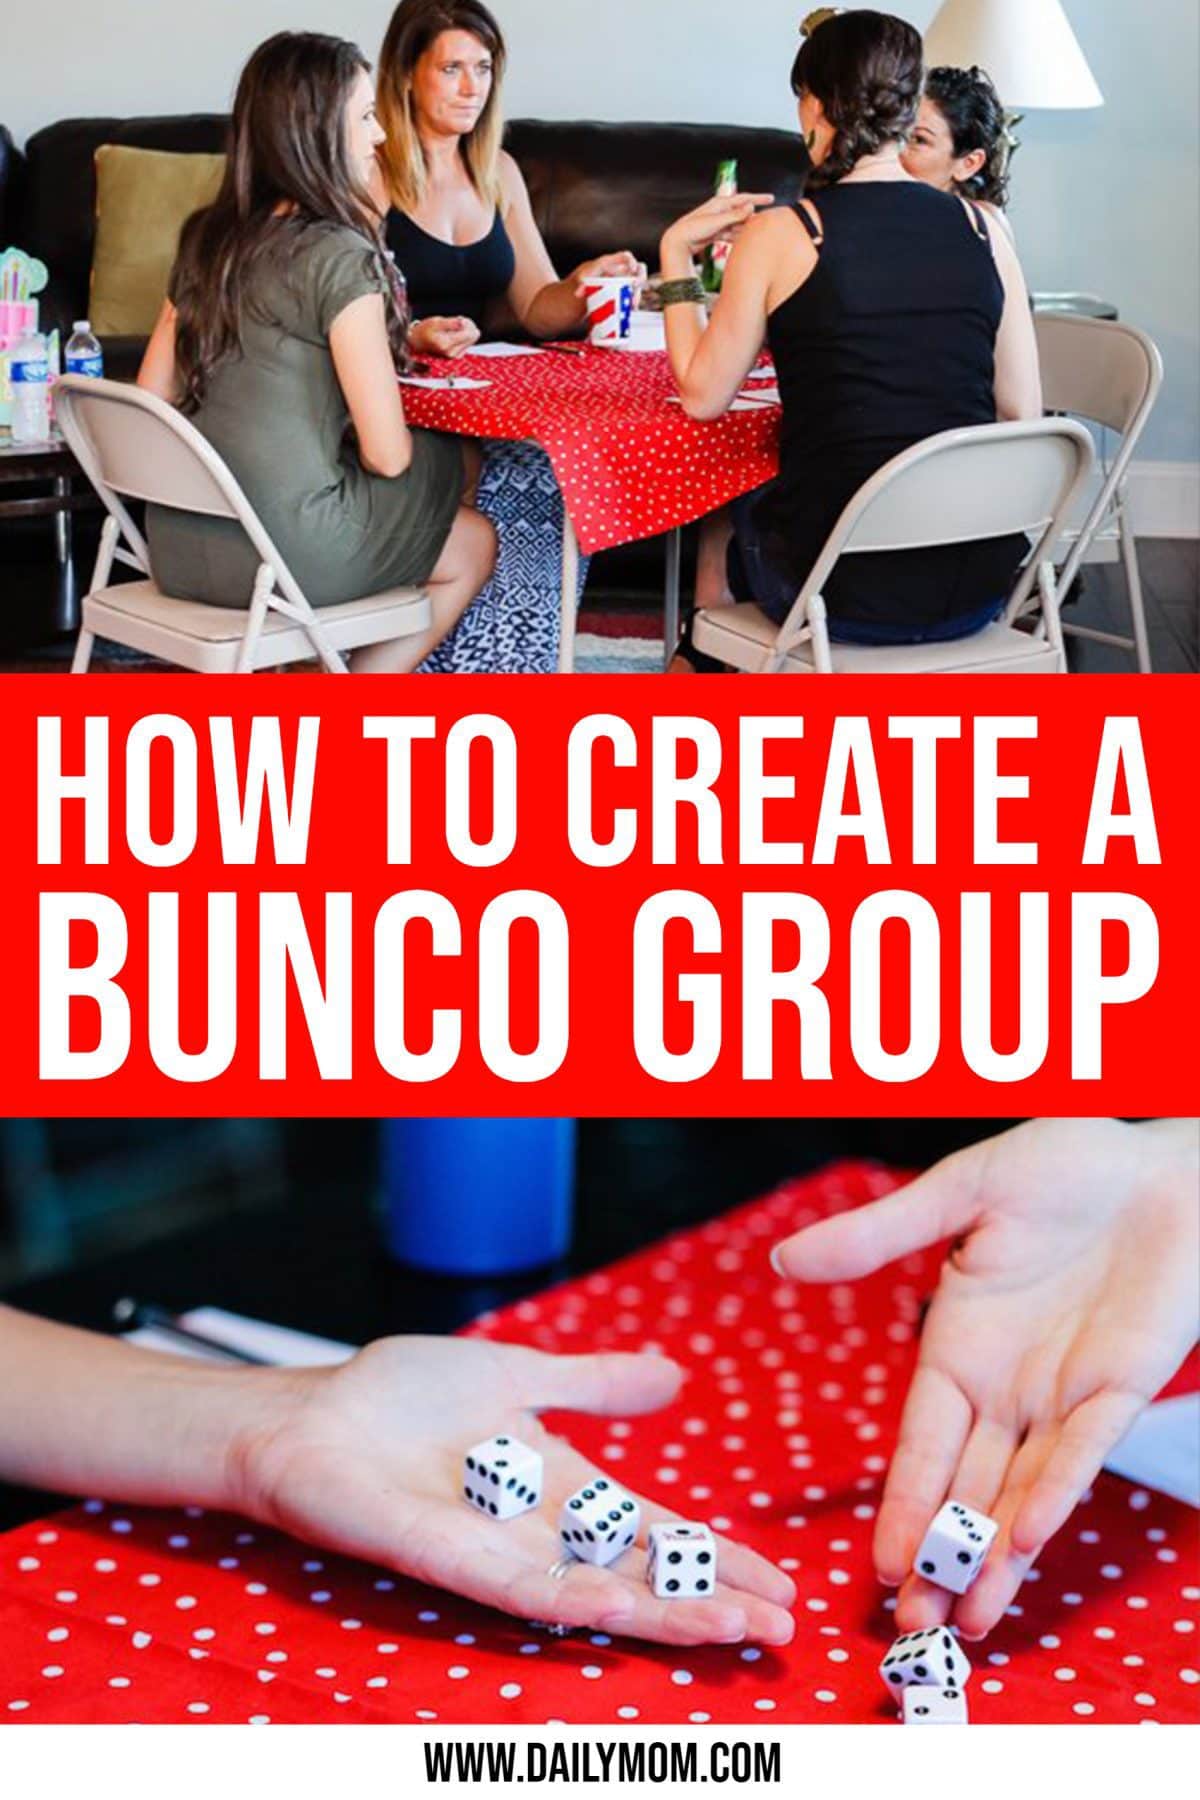 How To Create A Bunco Group